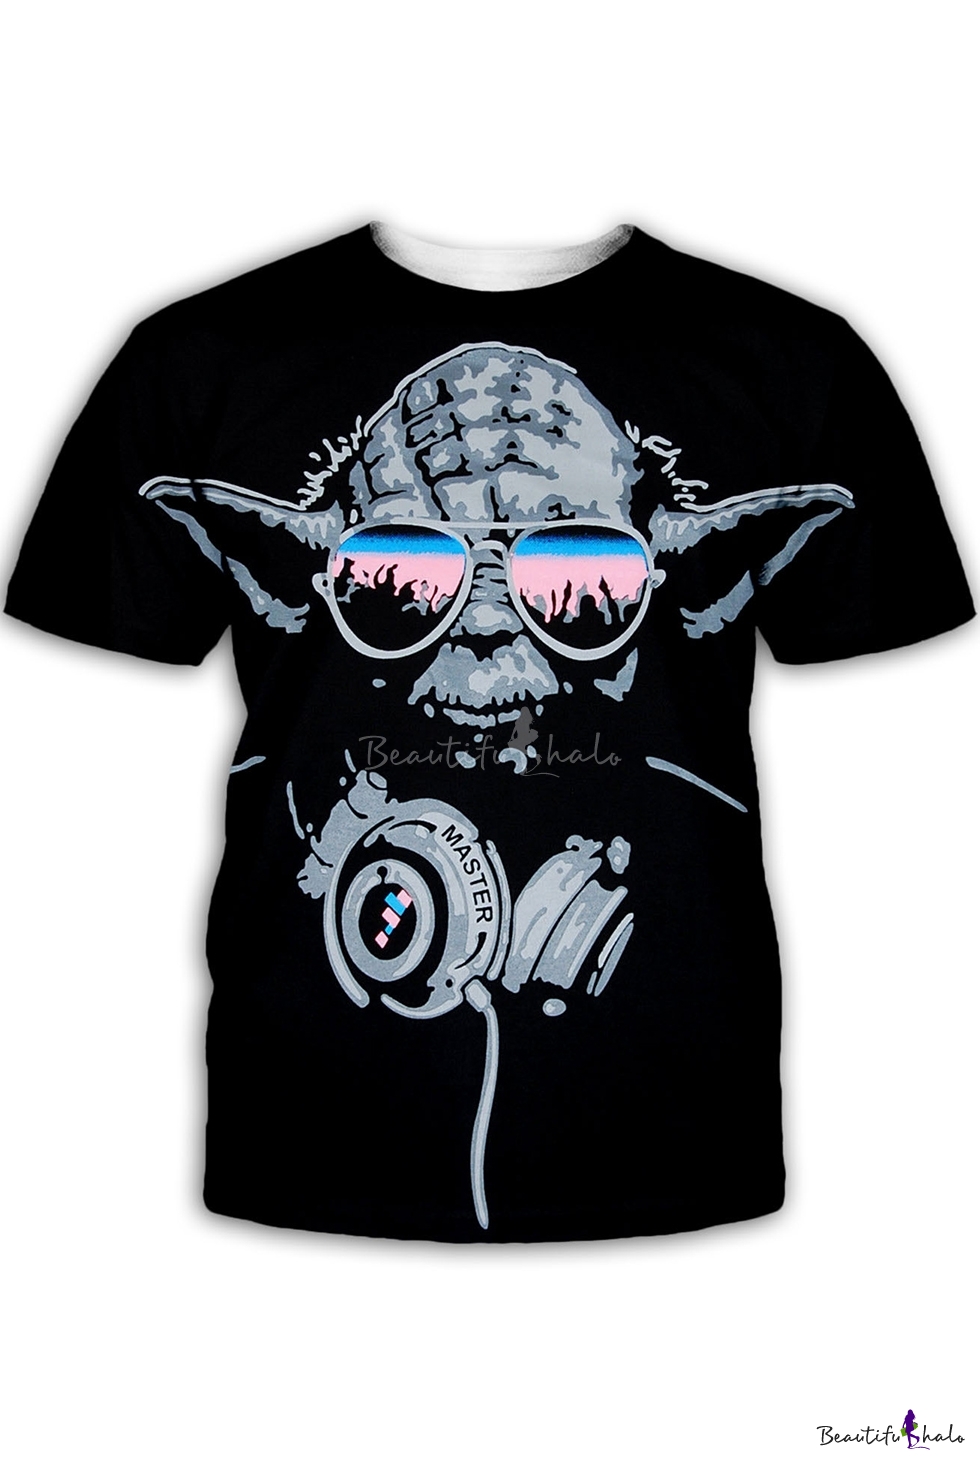 Movie Master Yoda Star Wars Women Men T-Shirt 3D Print Short Sleeve Tee Tops